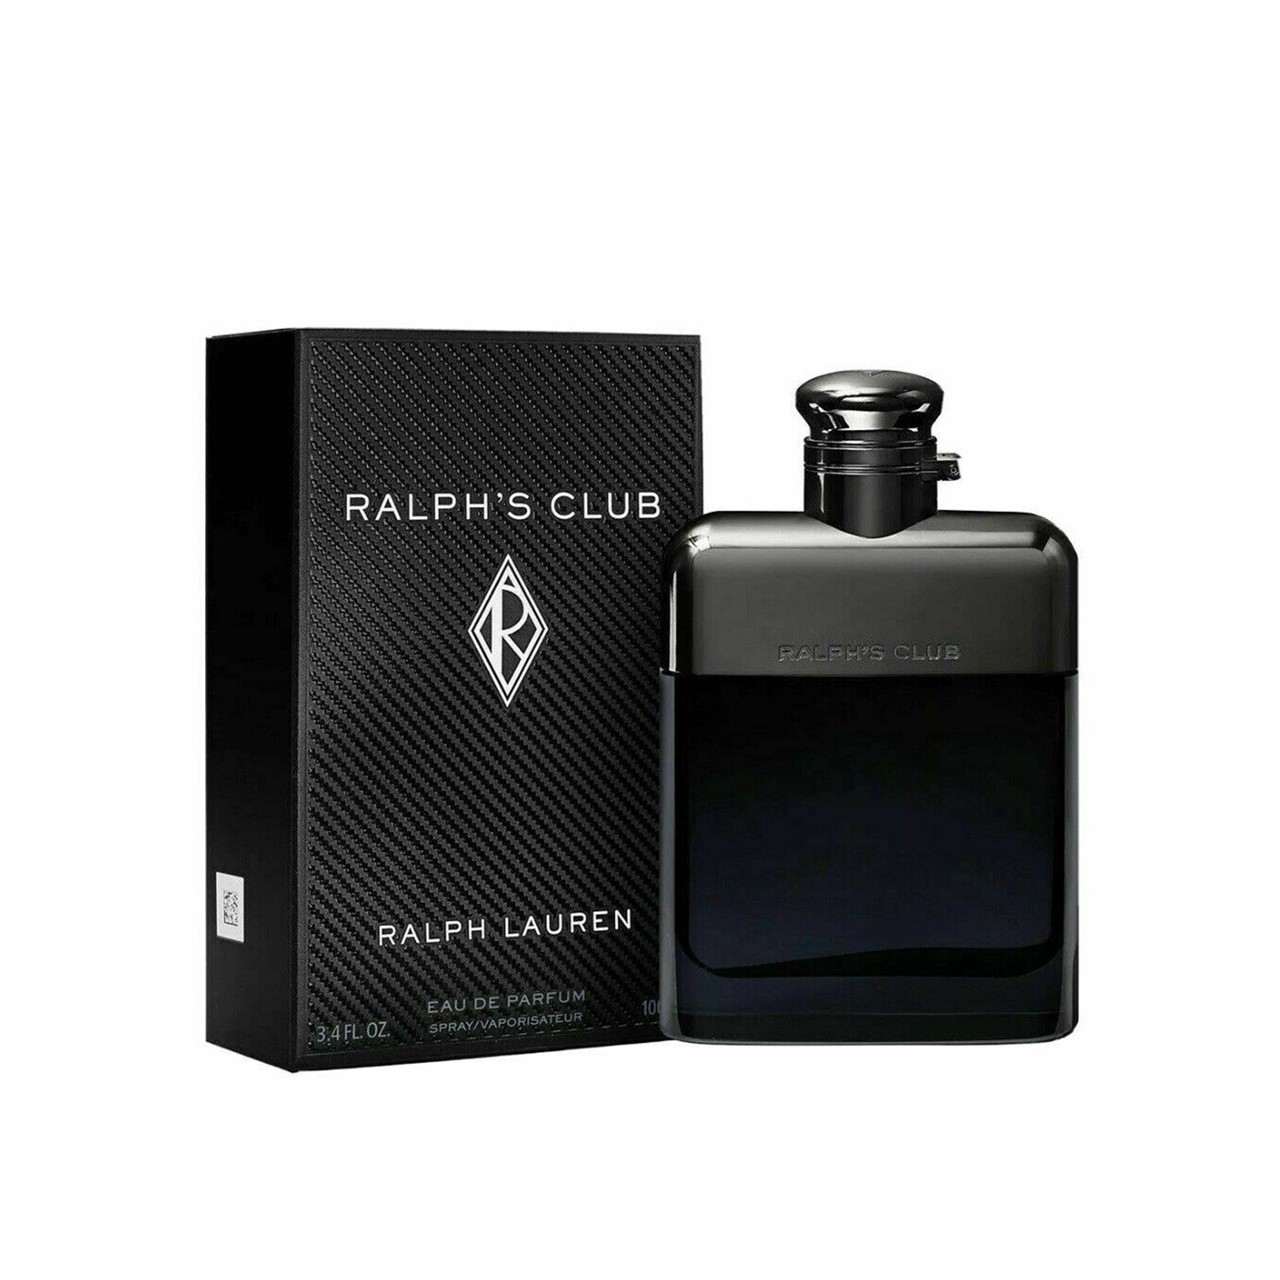 Buy Ralph Lauren Ralph's Club Eau de Parfum For Men · Seychelles